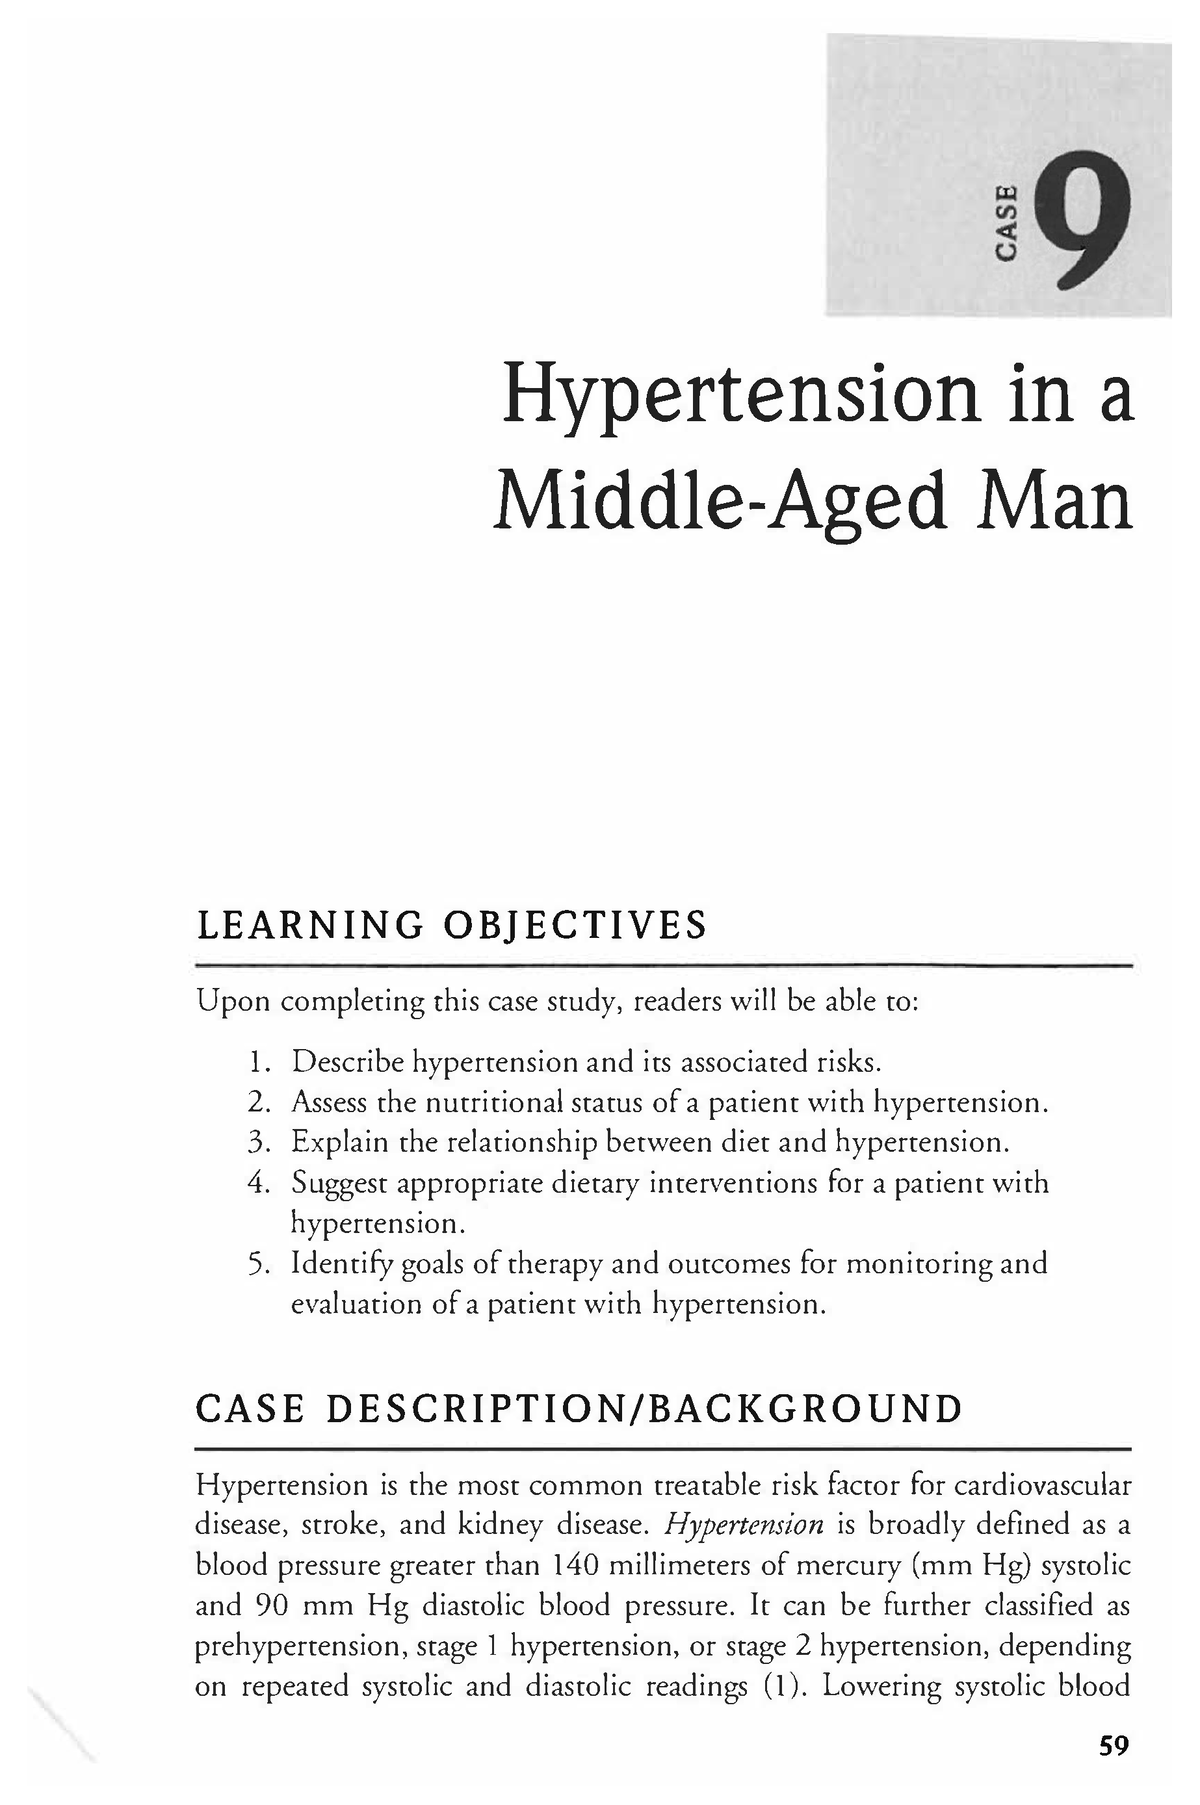 a case study hypertension